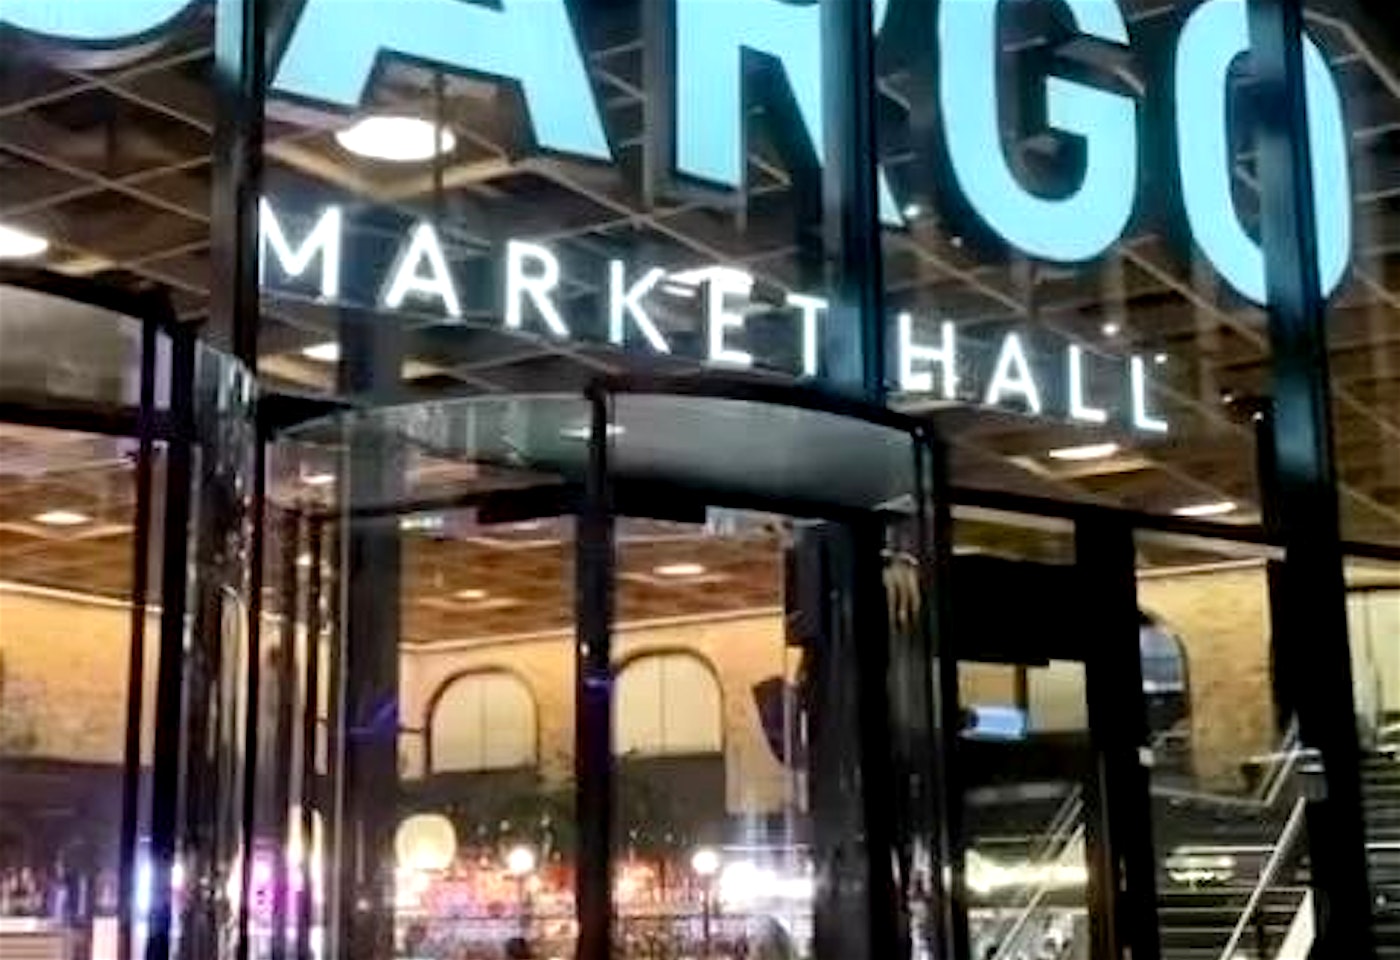 Market halls restauarant hire london 